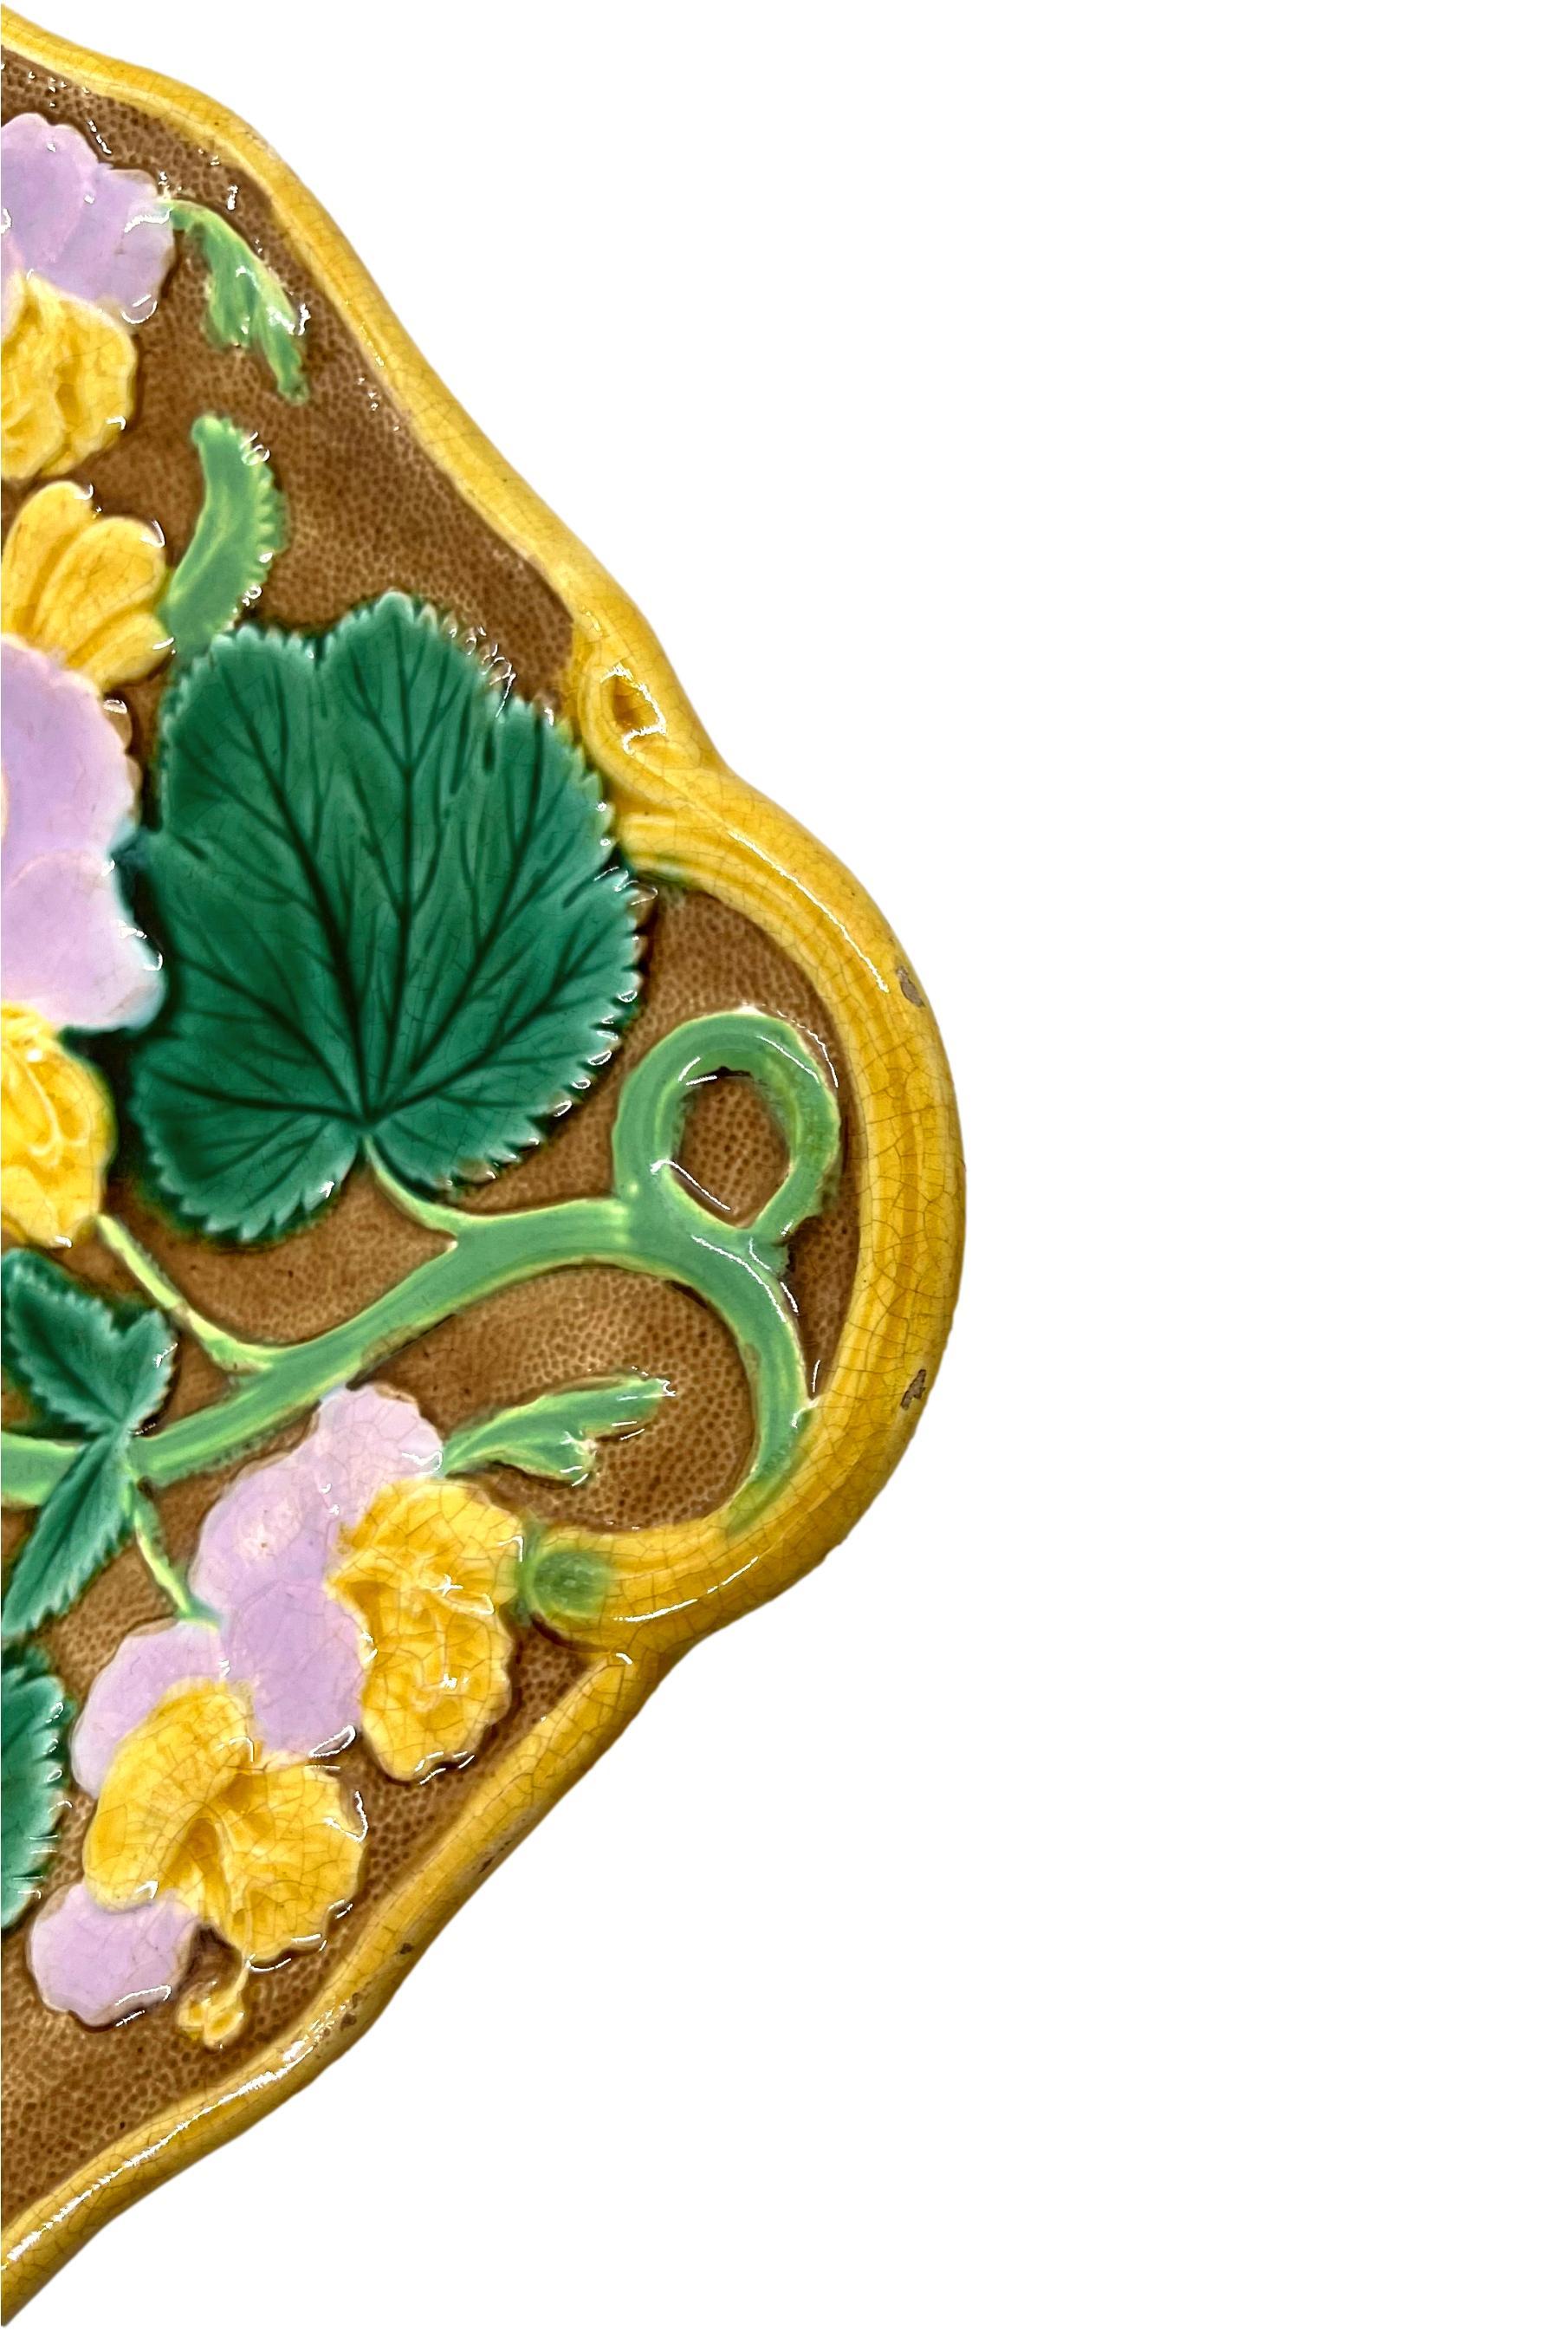 Molded English Majolica Geranium Dessert Tray Glazed in Green, Pink, Yellow, ca. 1880